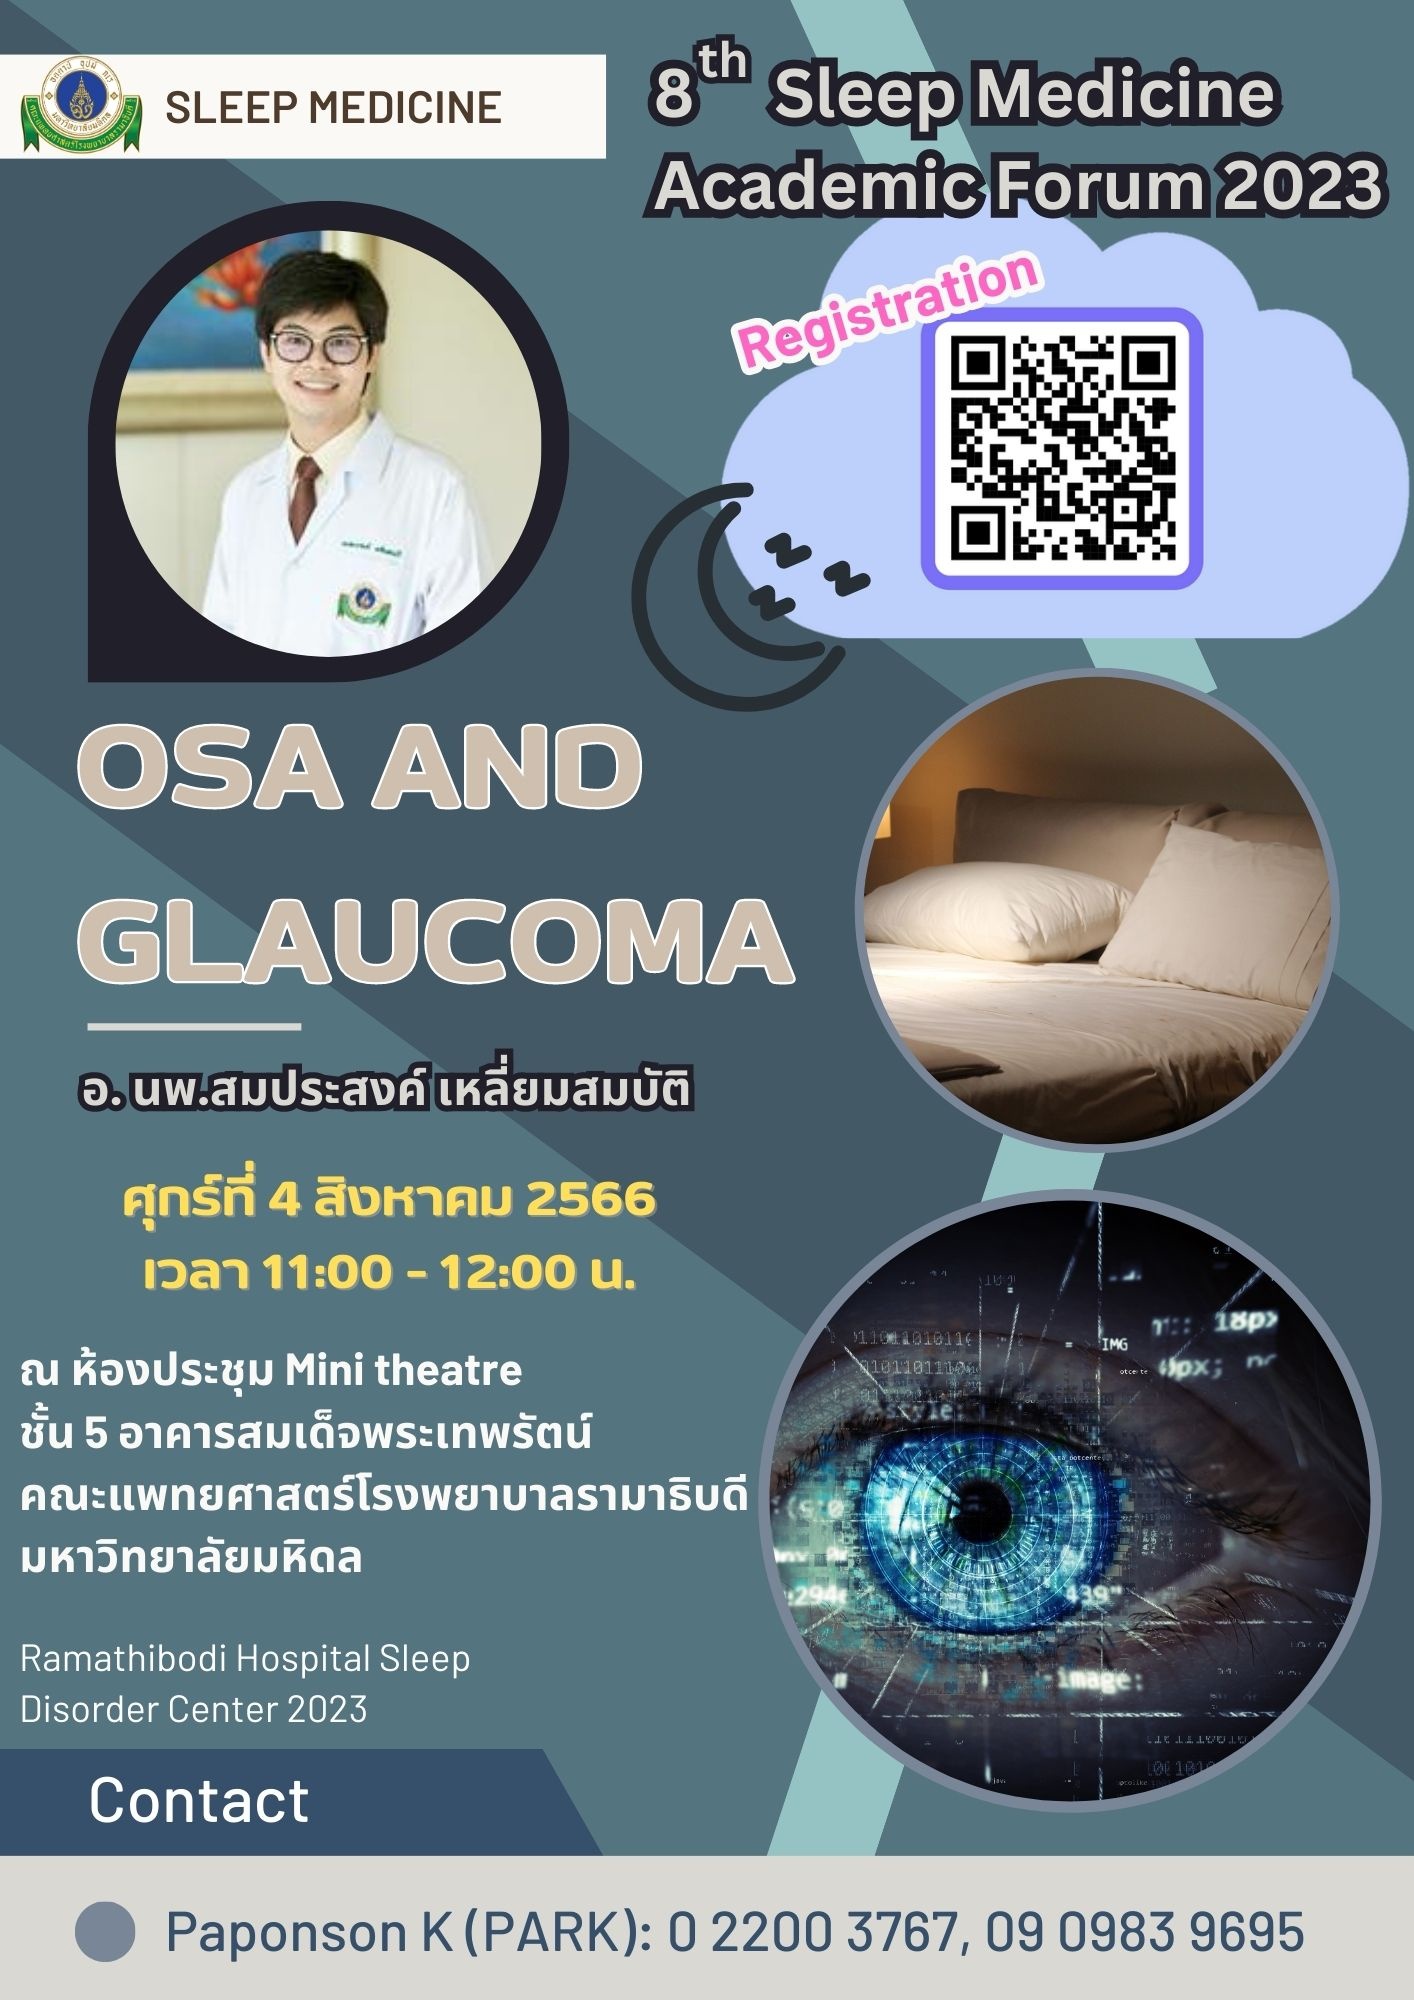 8th Sleep Medicine Academic Forum 2023 OSA AND GLAUCOMA